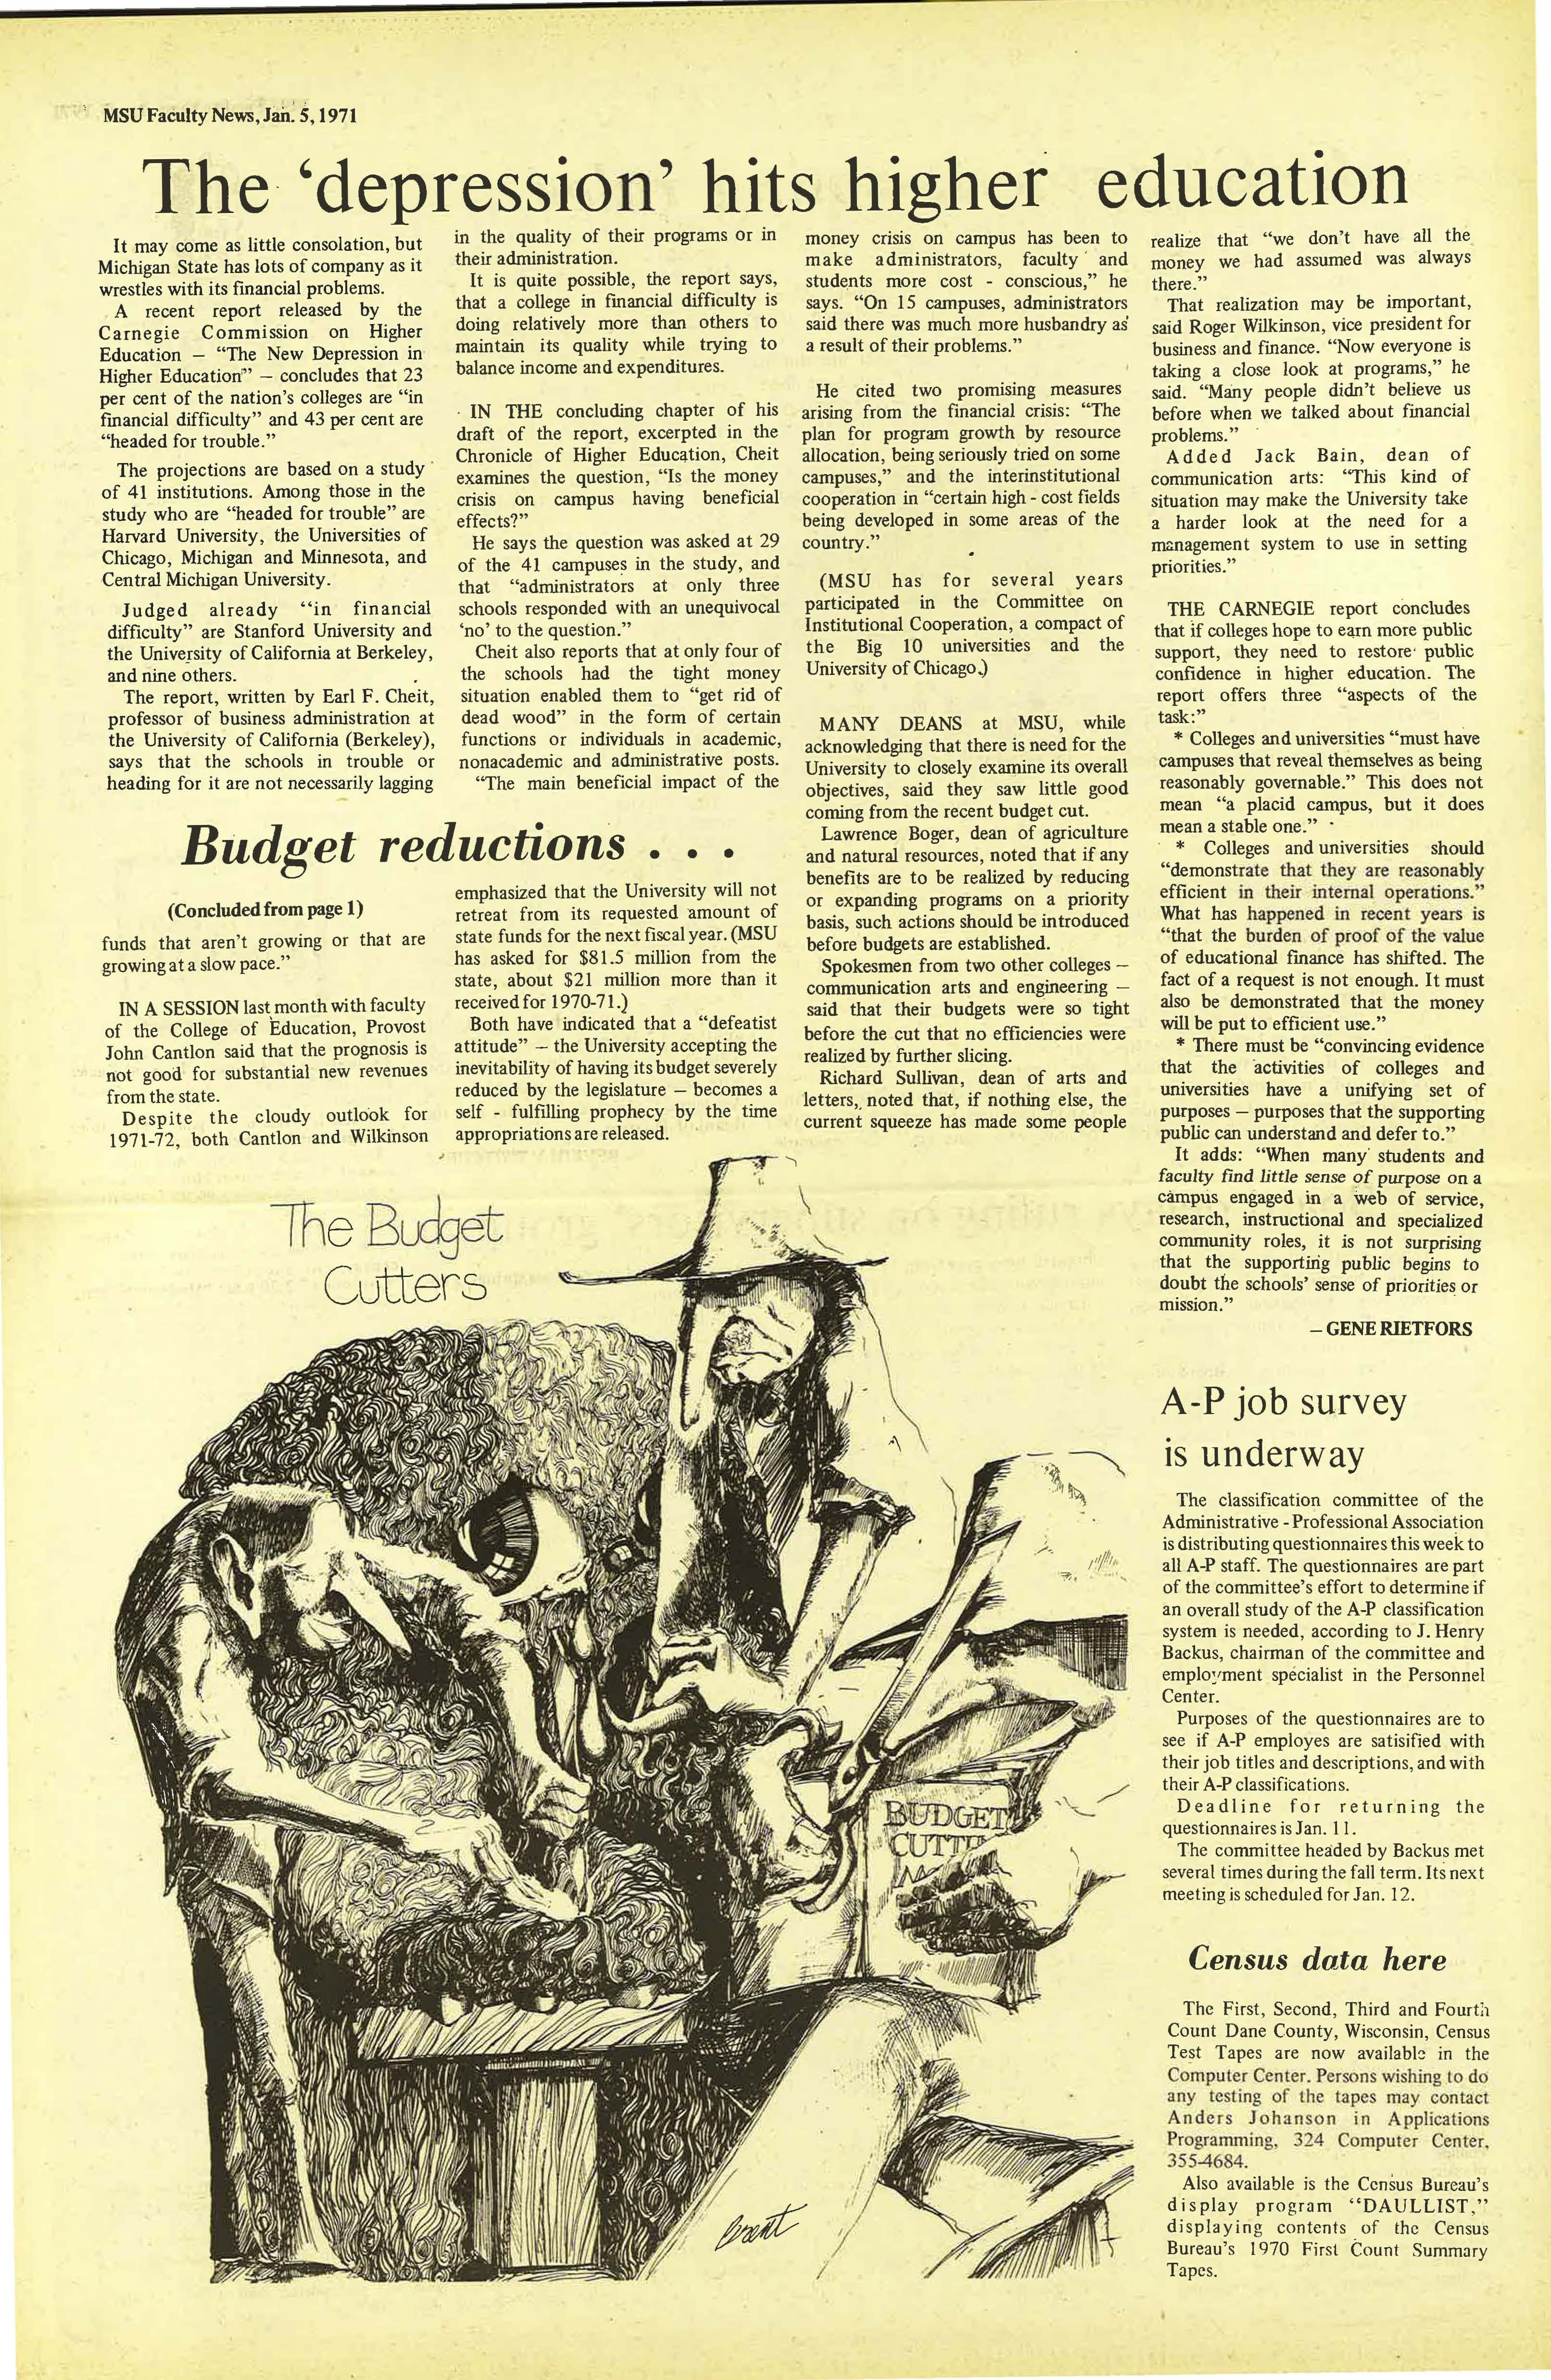 MSU News Bulletin, Vol. 2, No. 12, January 12, 1971